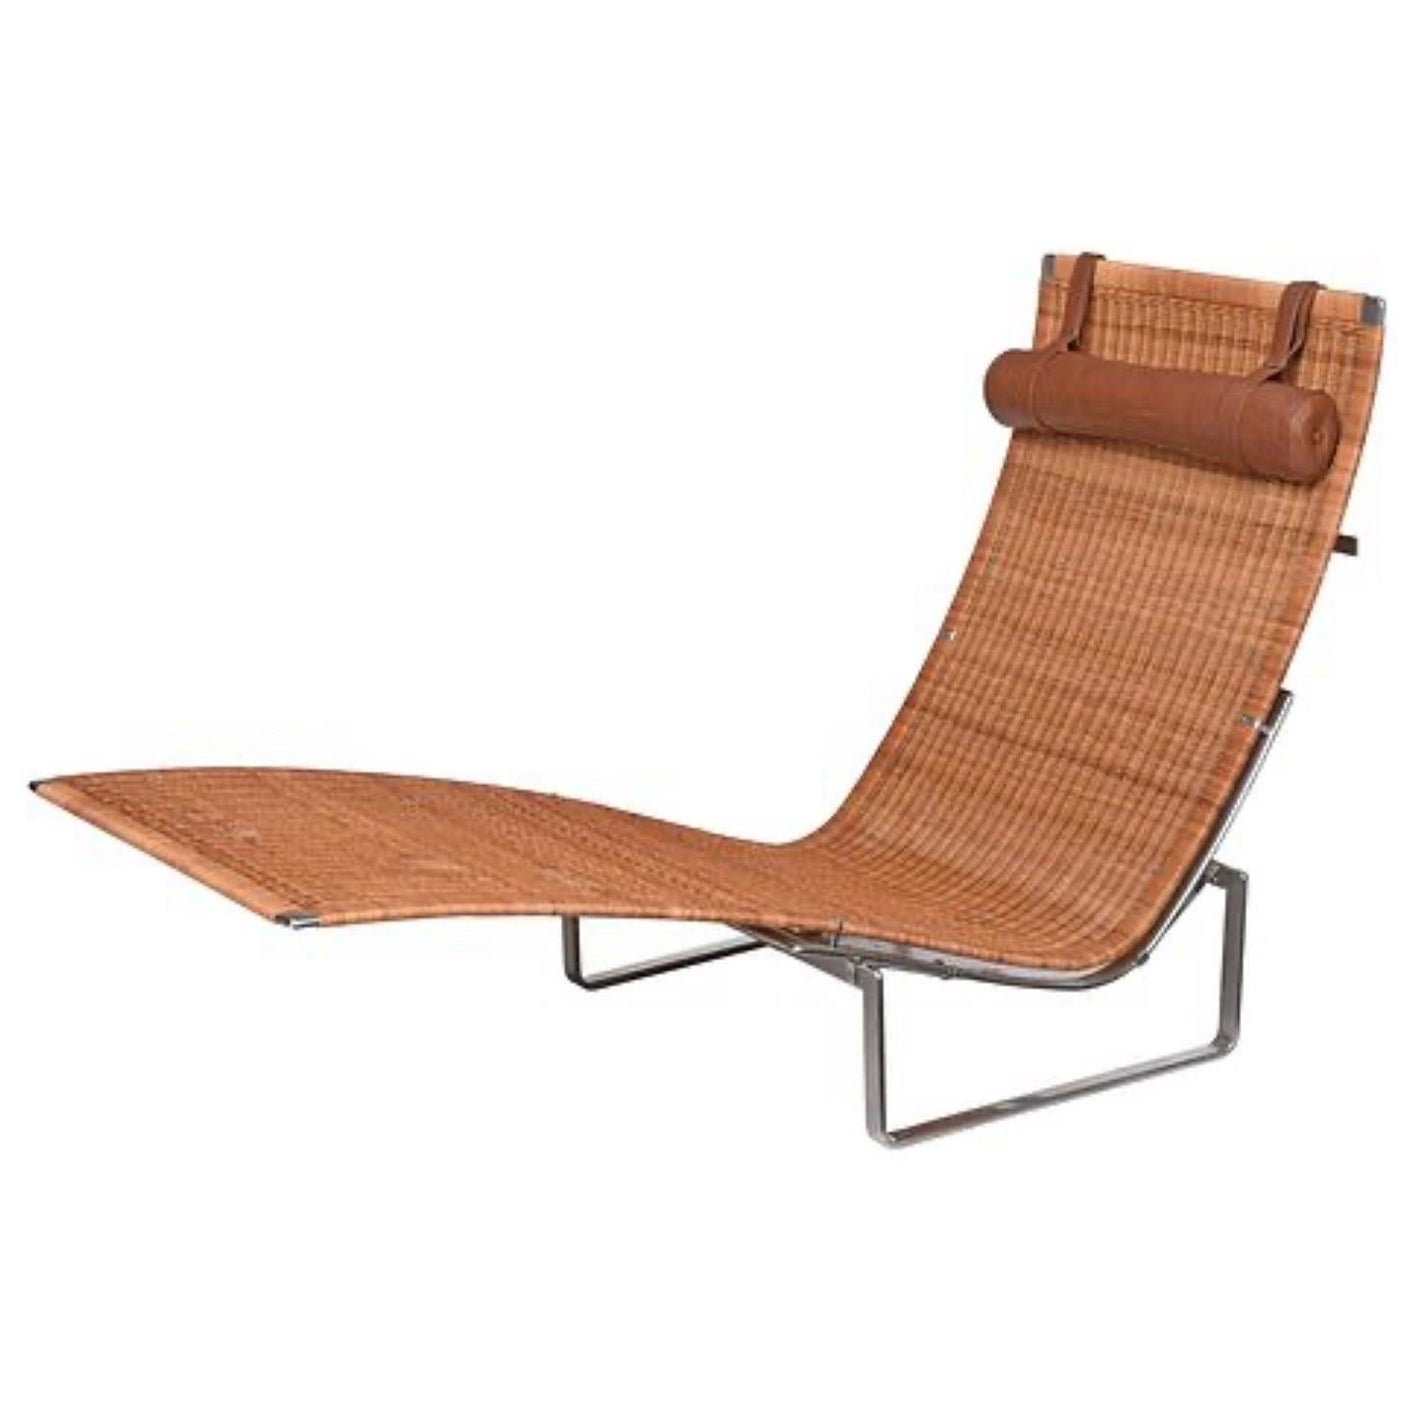 Poul Kjaerholm for Fritz Hansen "PK24" Wicker and Chrome Lounge Chair